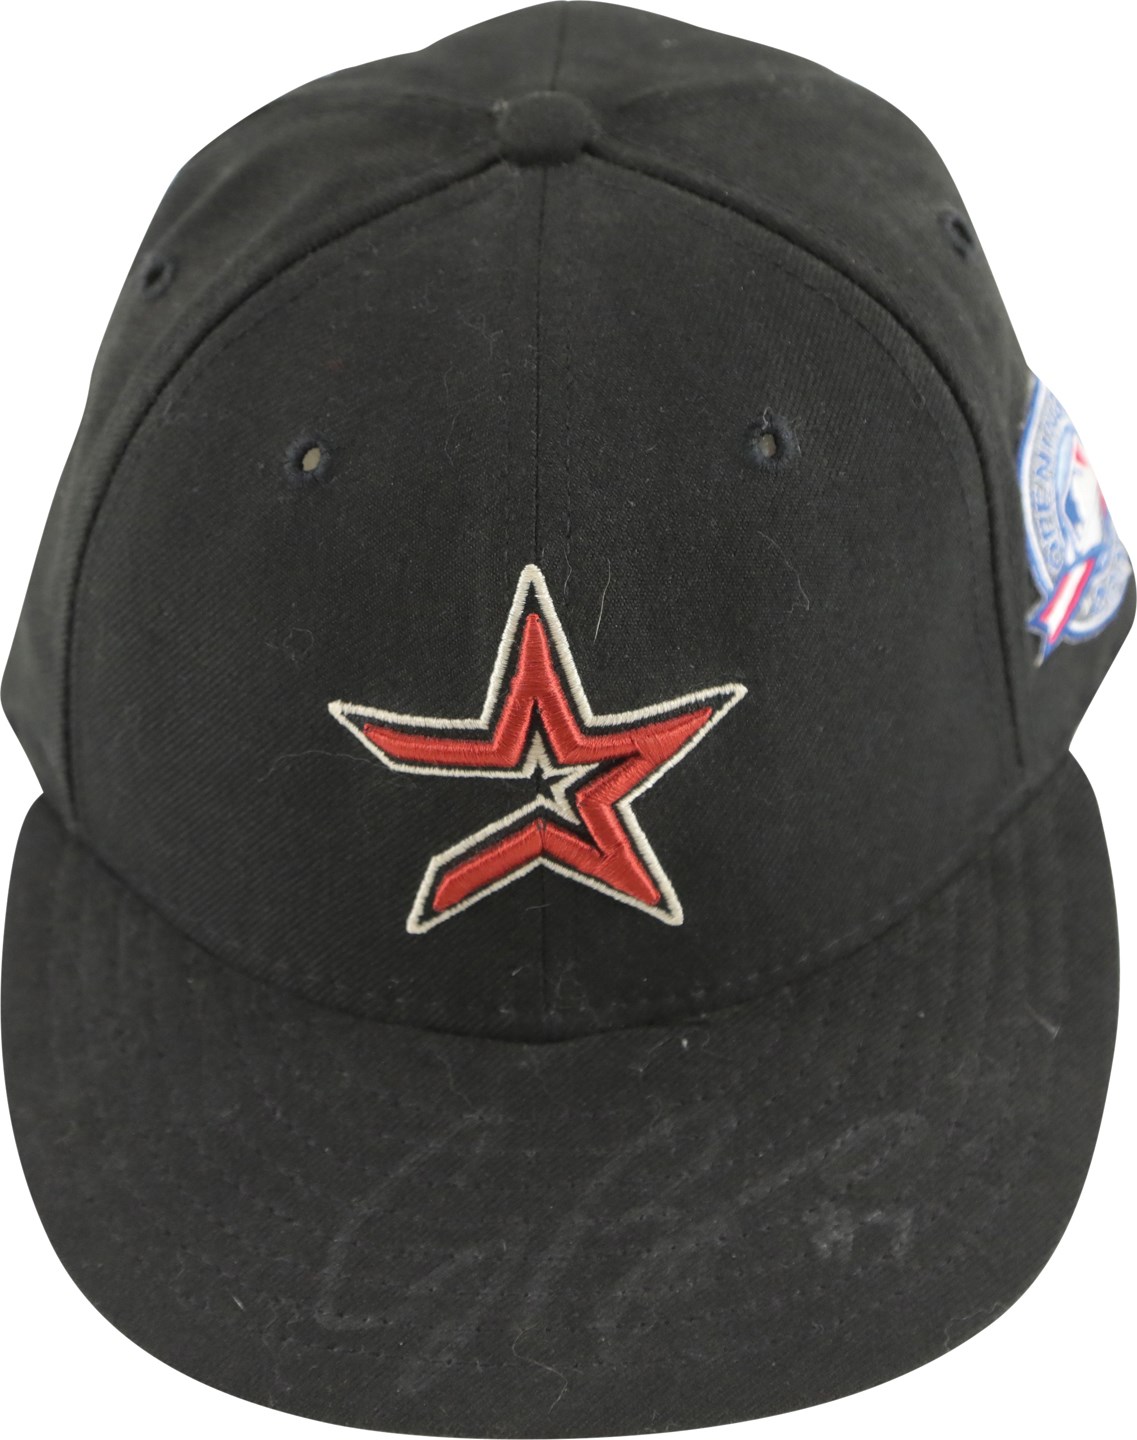 Baseball Equipment - 2004 Craig Biggio Opening Day Houston Astros Signed Hat